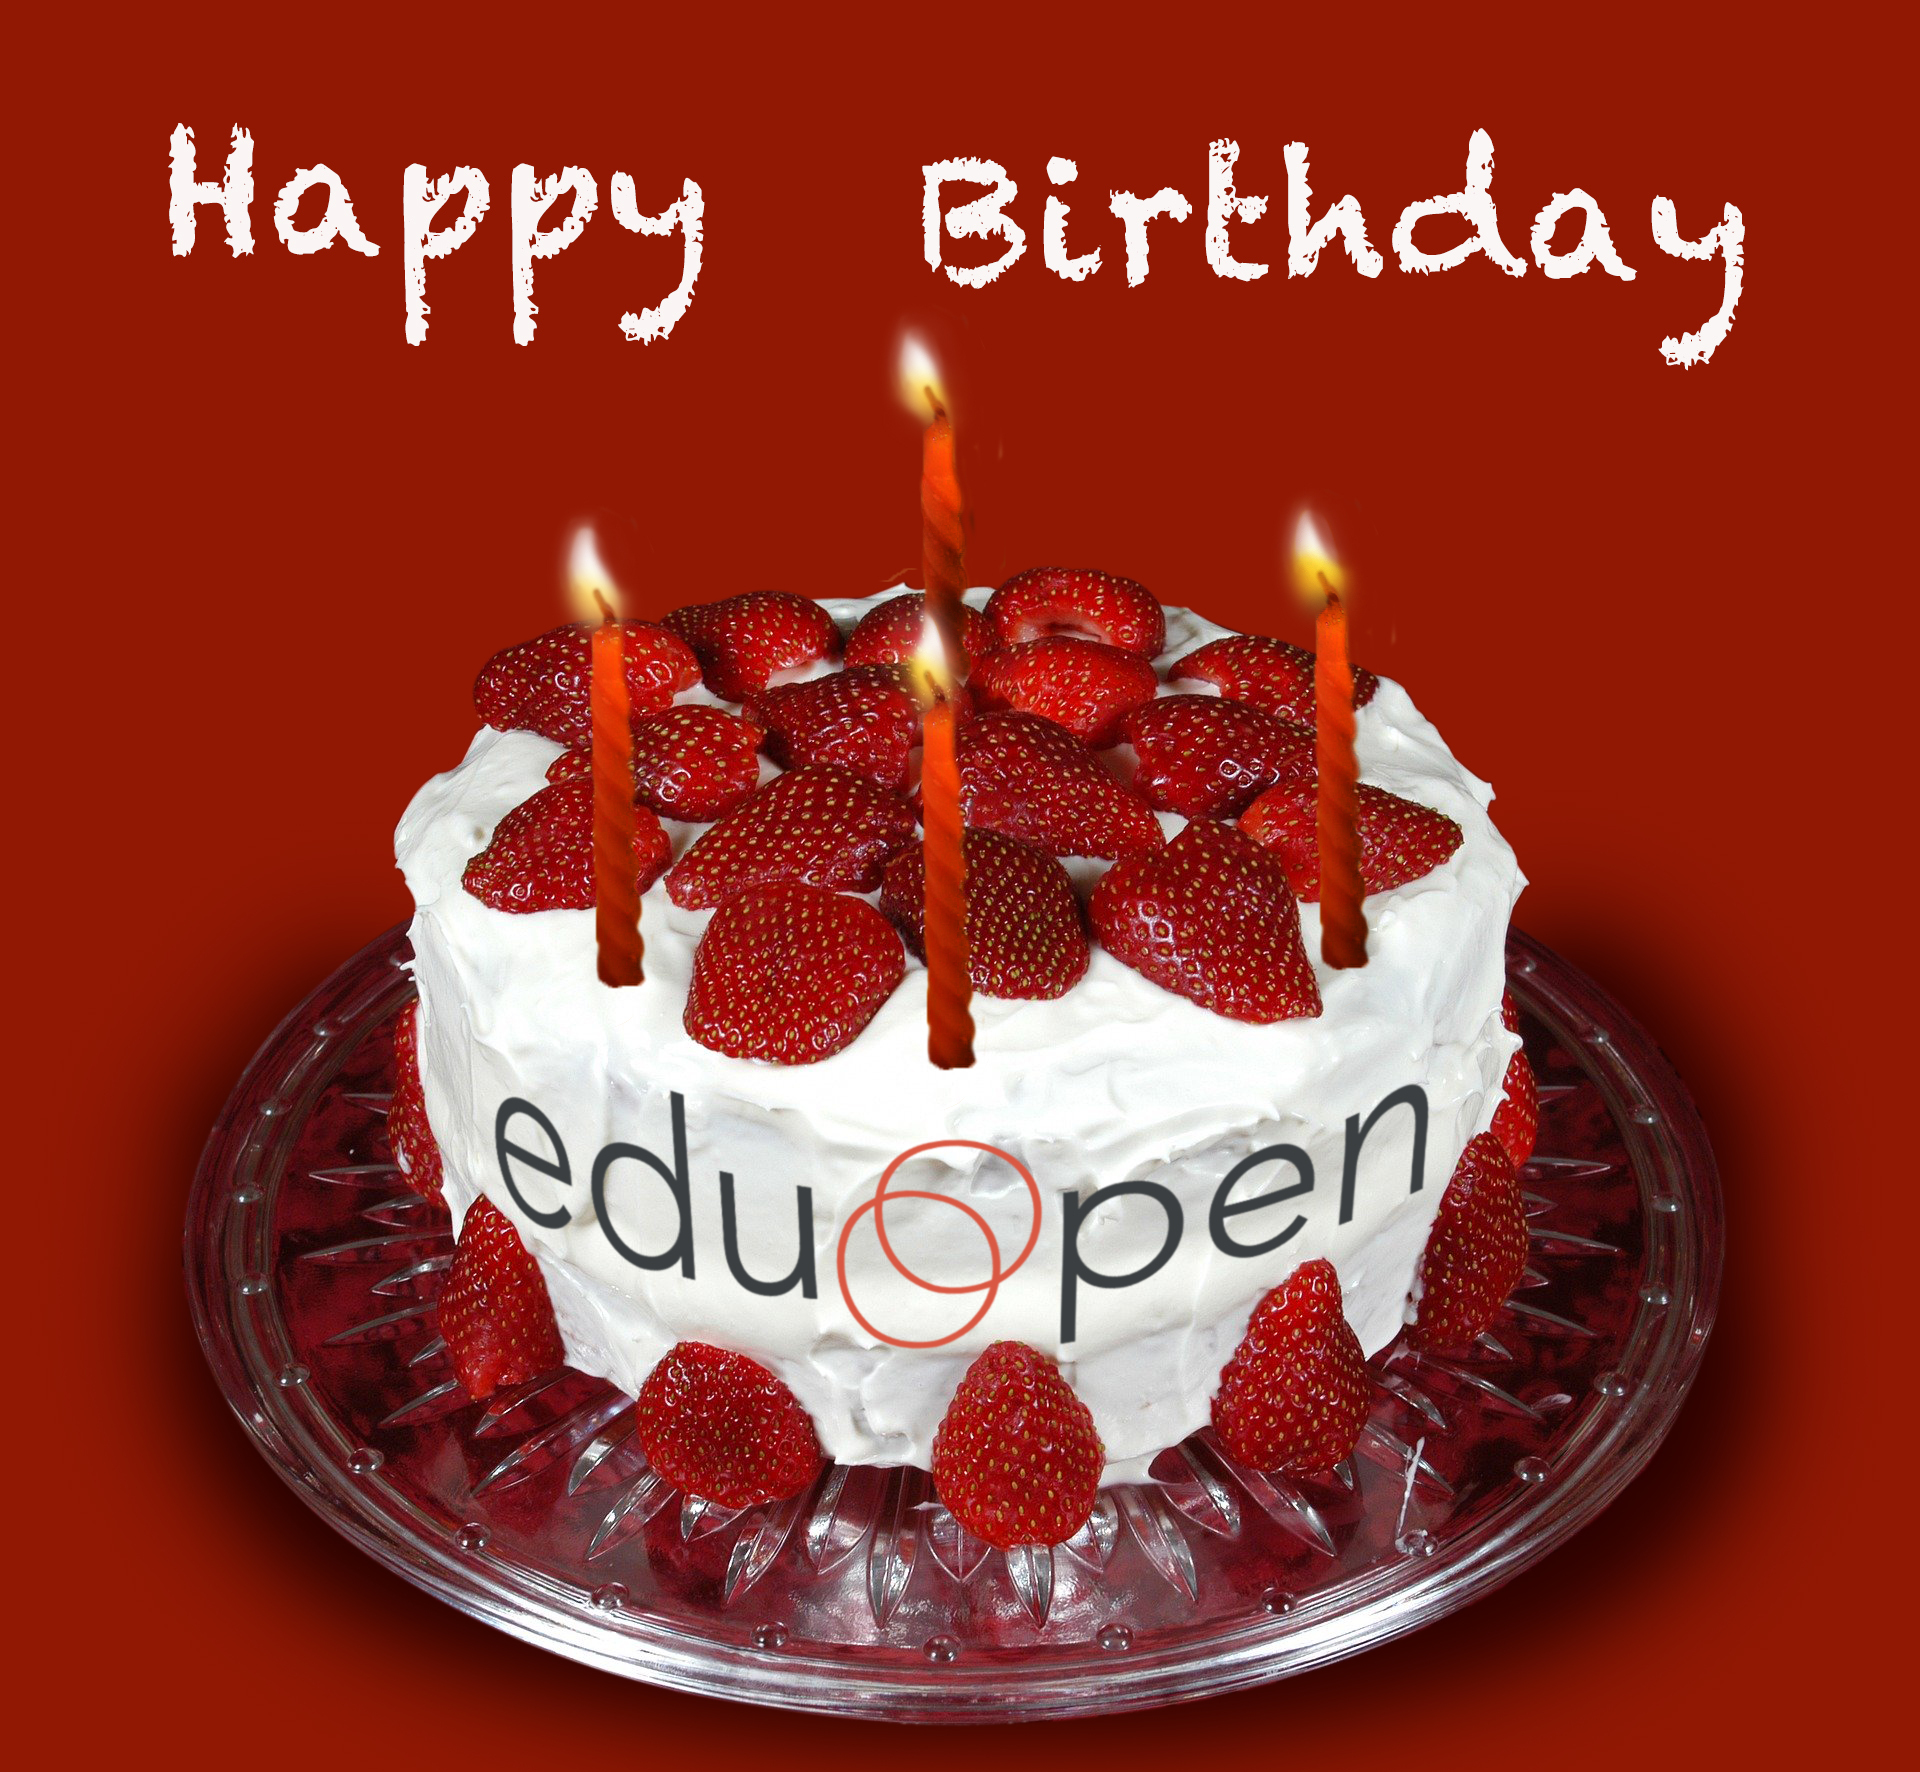 EduOpen birthday cake